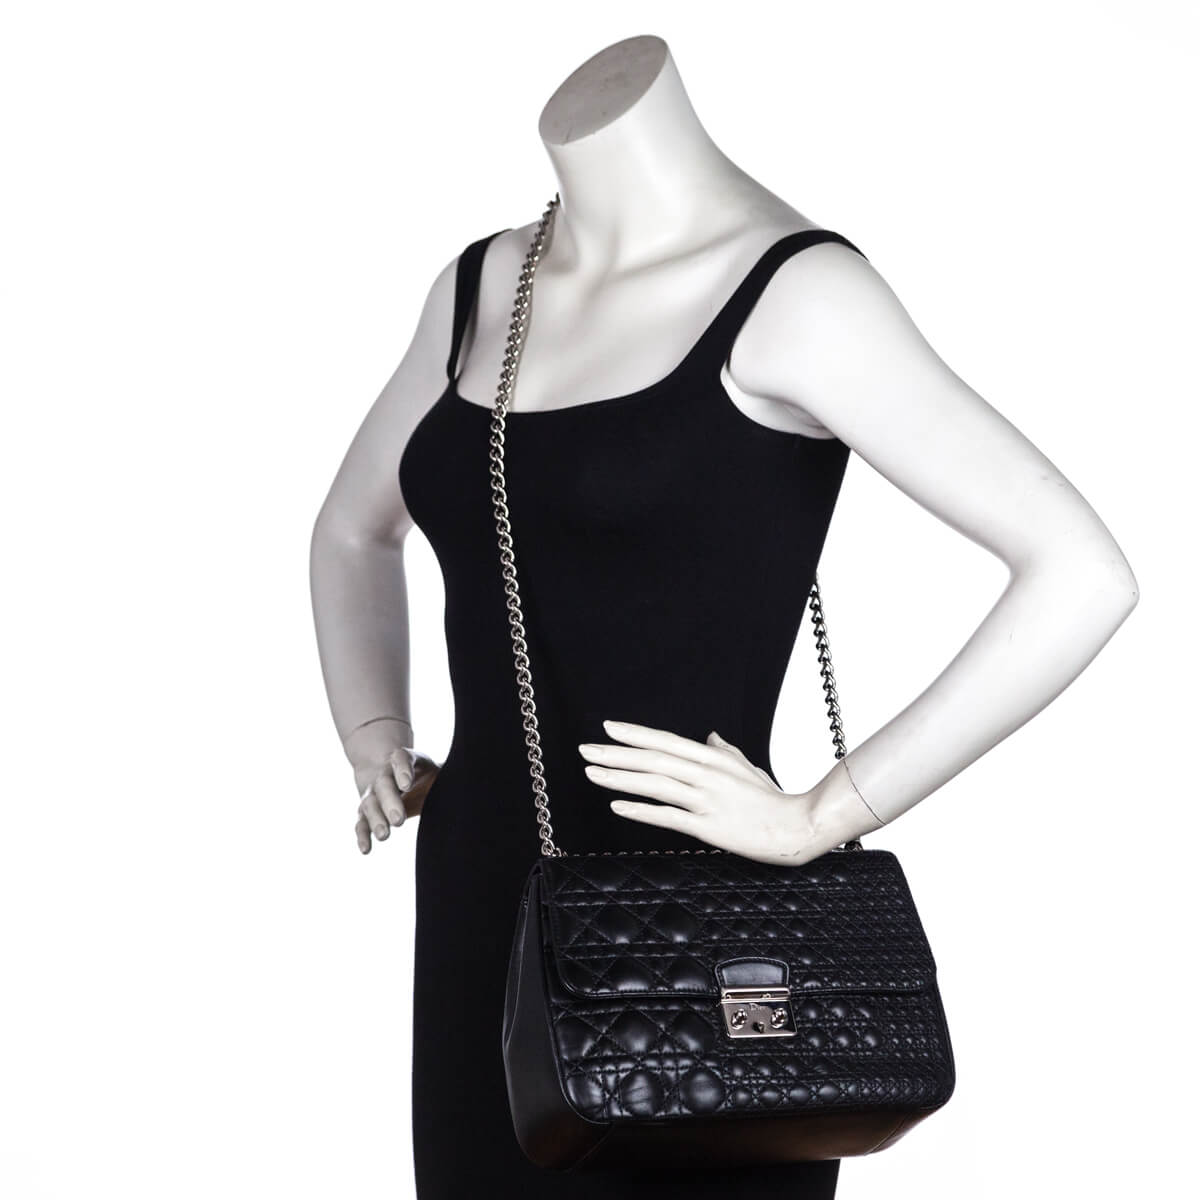 Dior Black Mini Cannage Calfskin Miss Dior Shoulder Bag - Love that Bag etc - Preowned Authentic Designer Handbags & Preloved Fashions